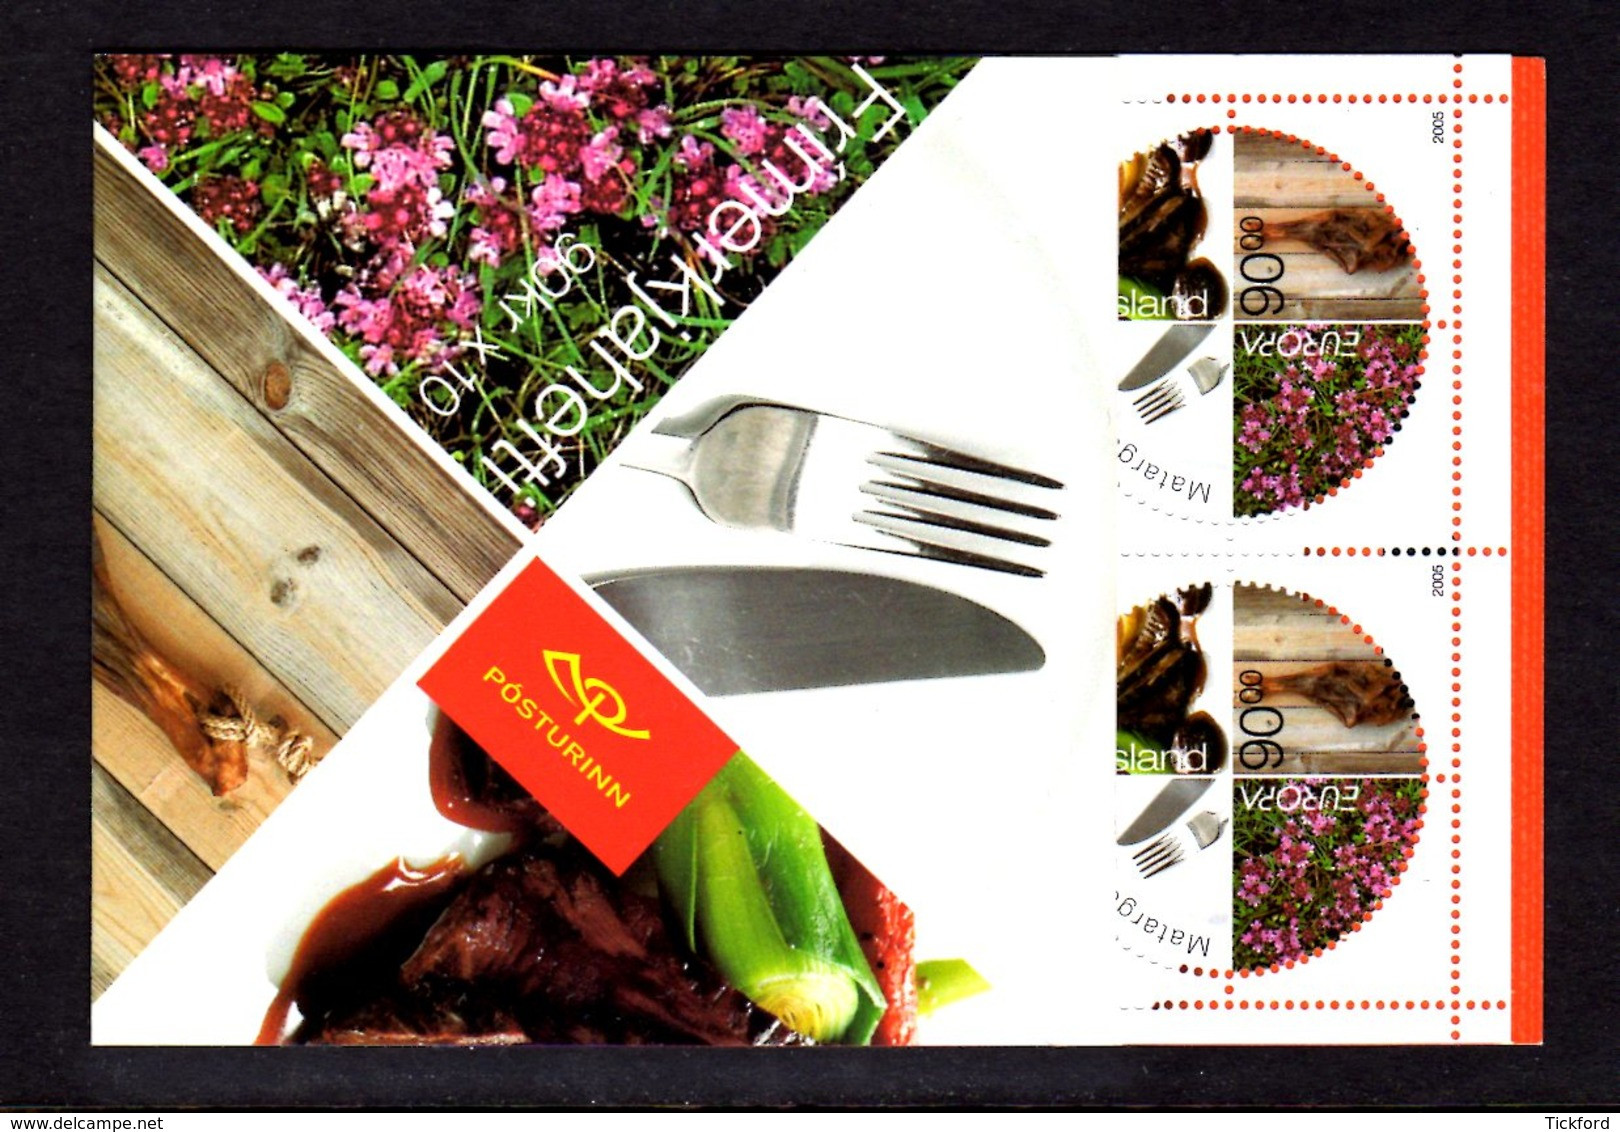 ISLANDE 2005 - Carnet Yvert C1031 - Booklet - Facit H80 - NEUF** MNH - Europa, La Gastronomie - Carnets